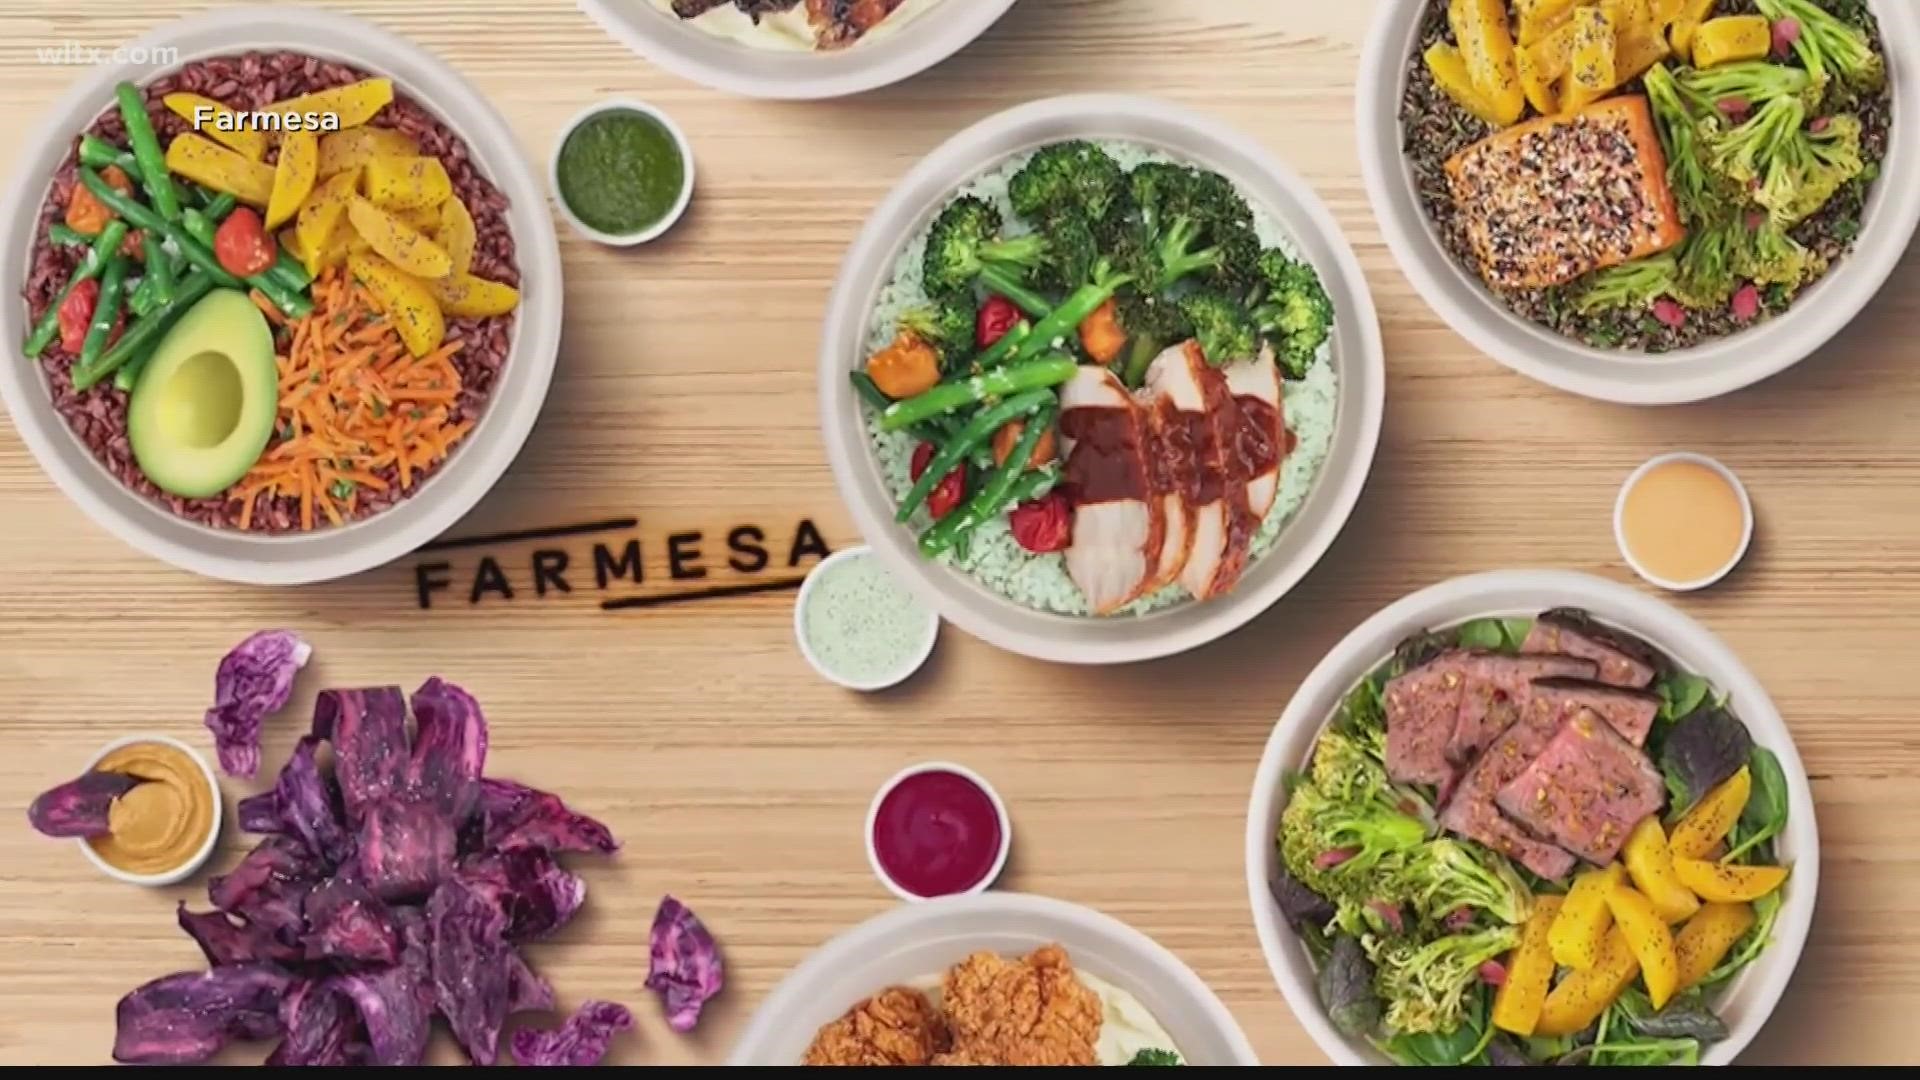 Chipotle to open new restaurant called Farmesa wltx